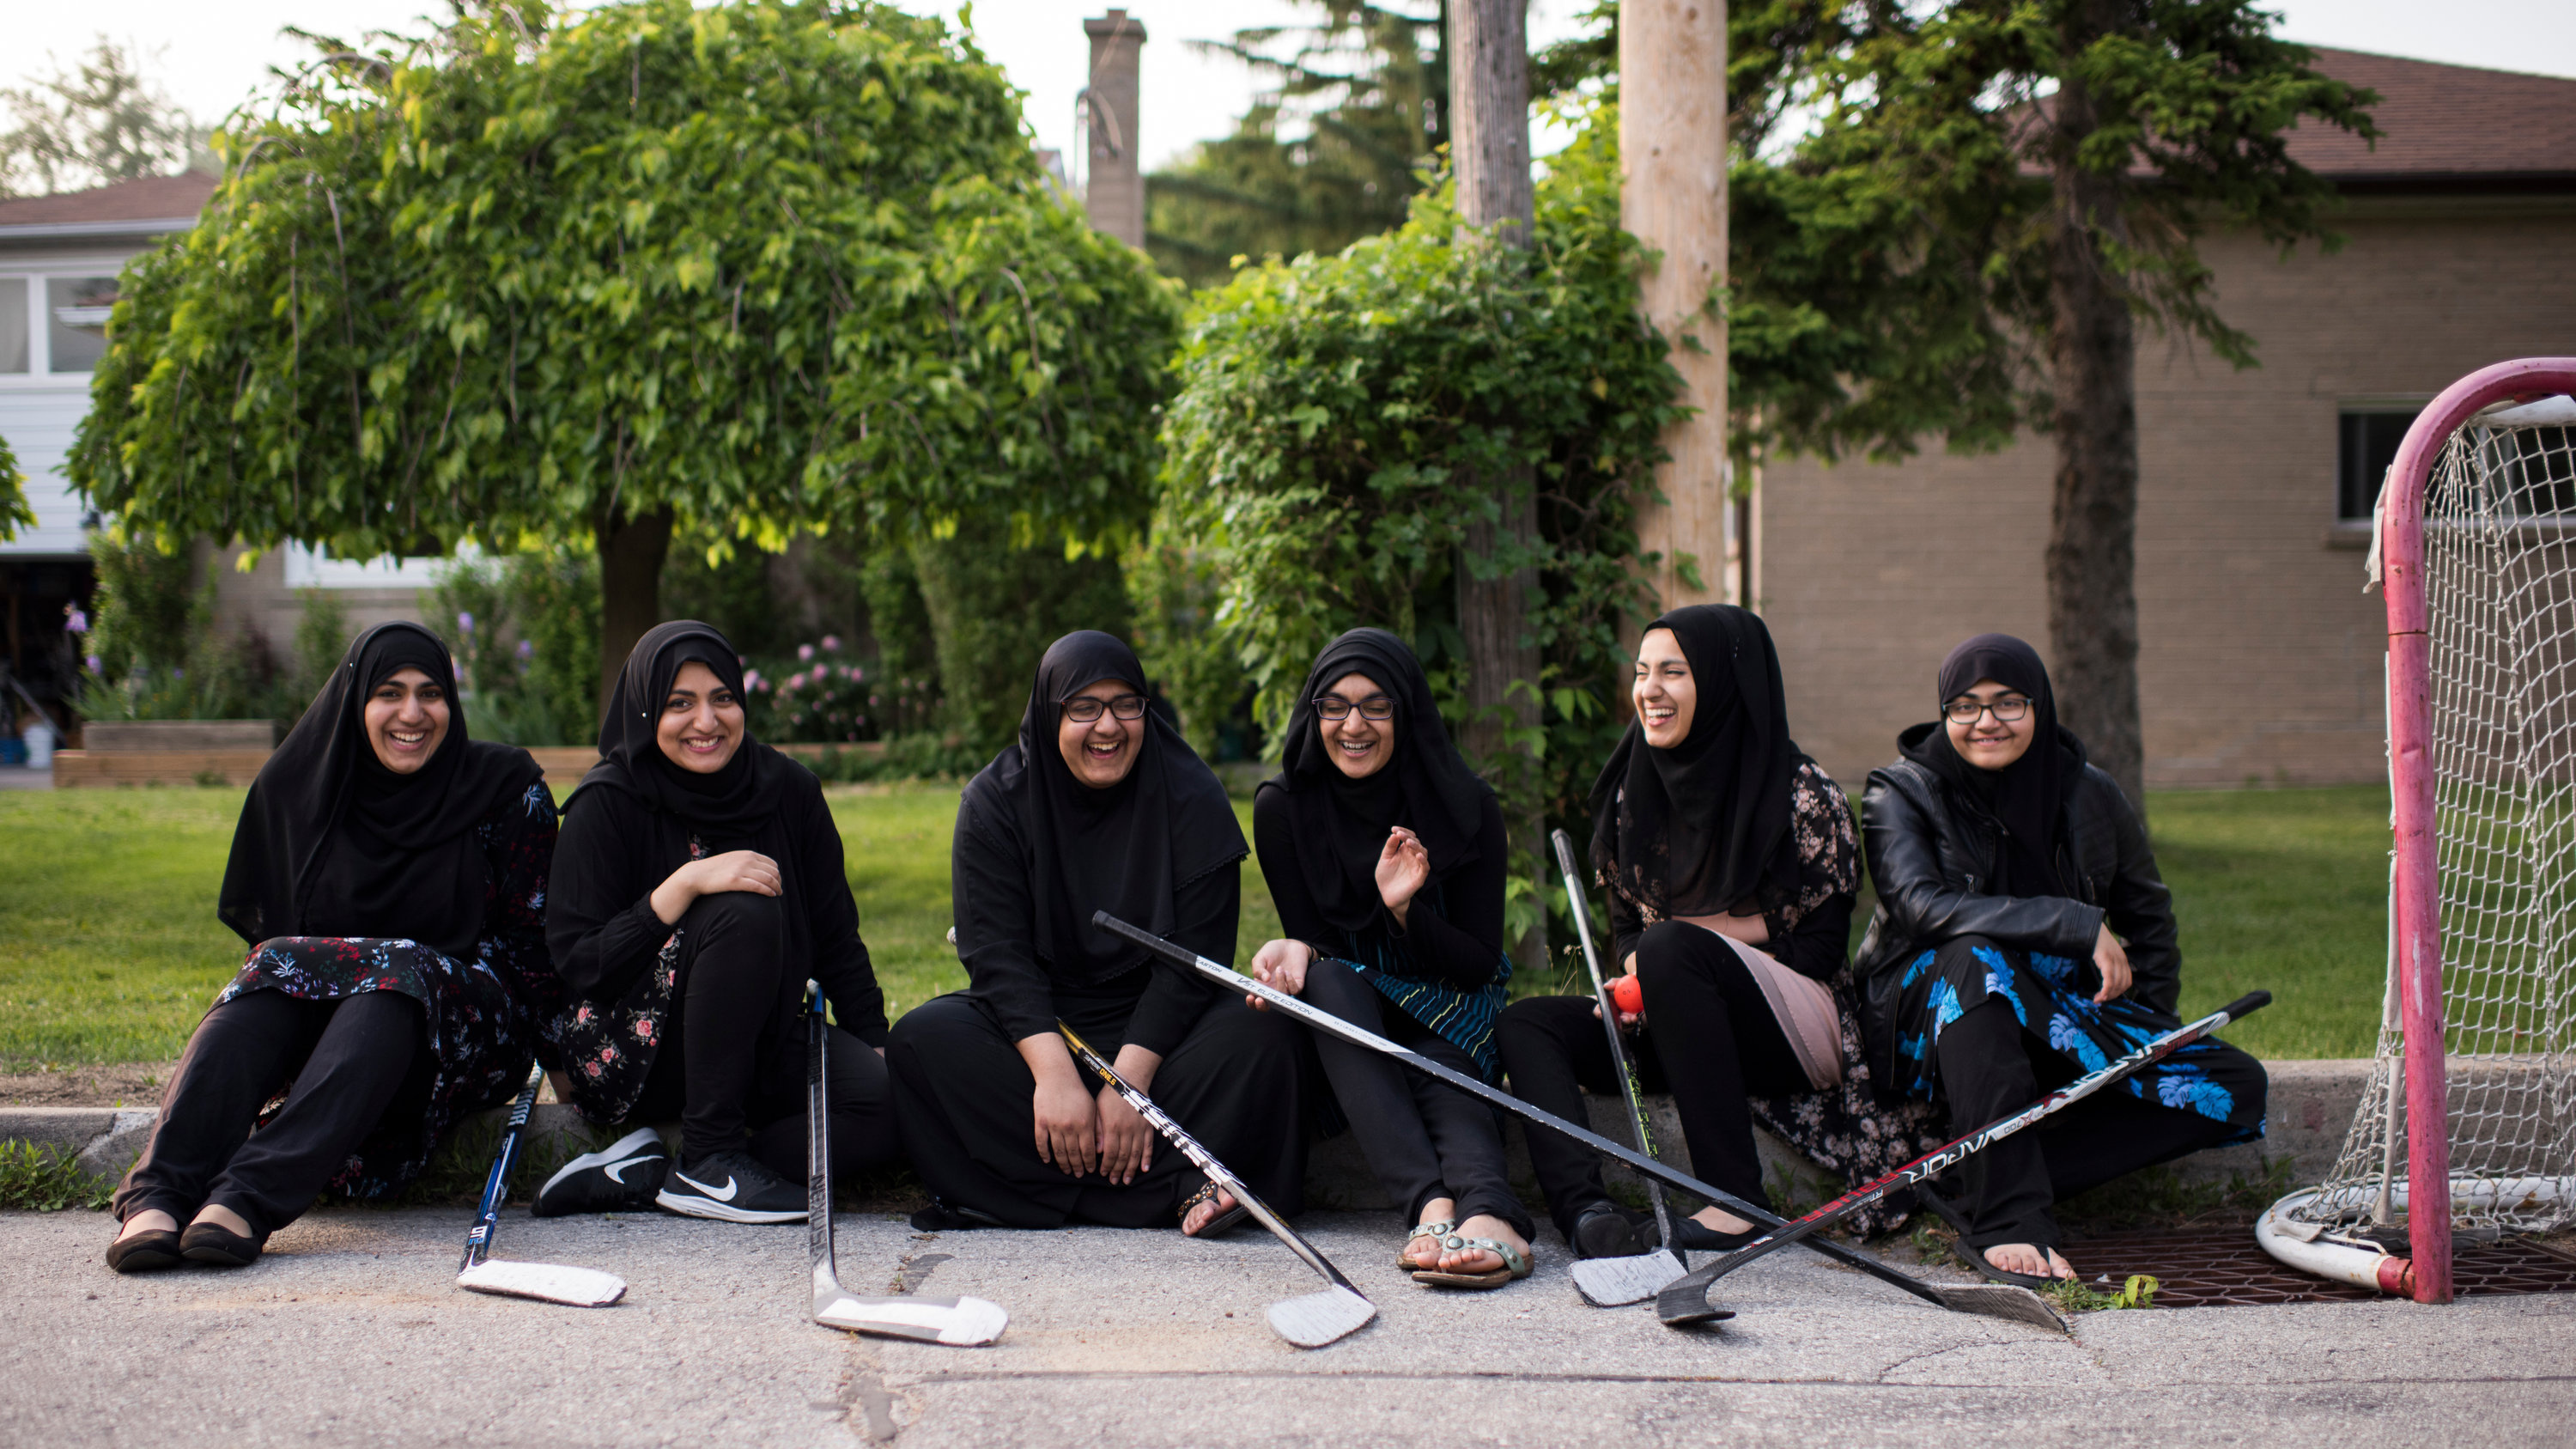 Ball Hockey: The Azmi Sisters, Hijab-wearing Muslim Players, Summer League of the Toronto Women’s Ball Hockey Association. 3000x1690 HD Wallpaper.